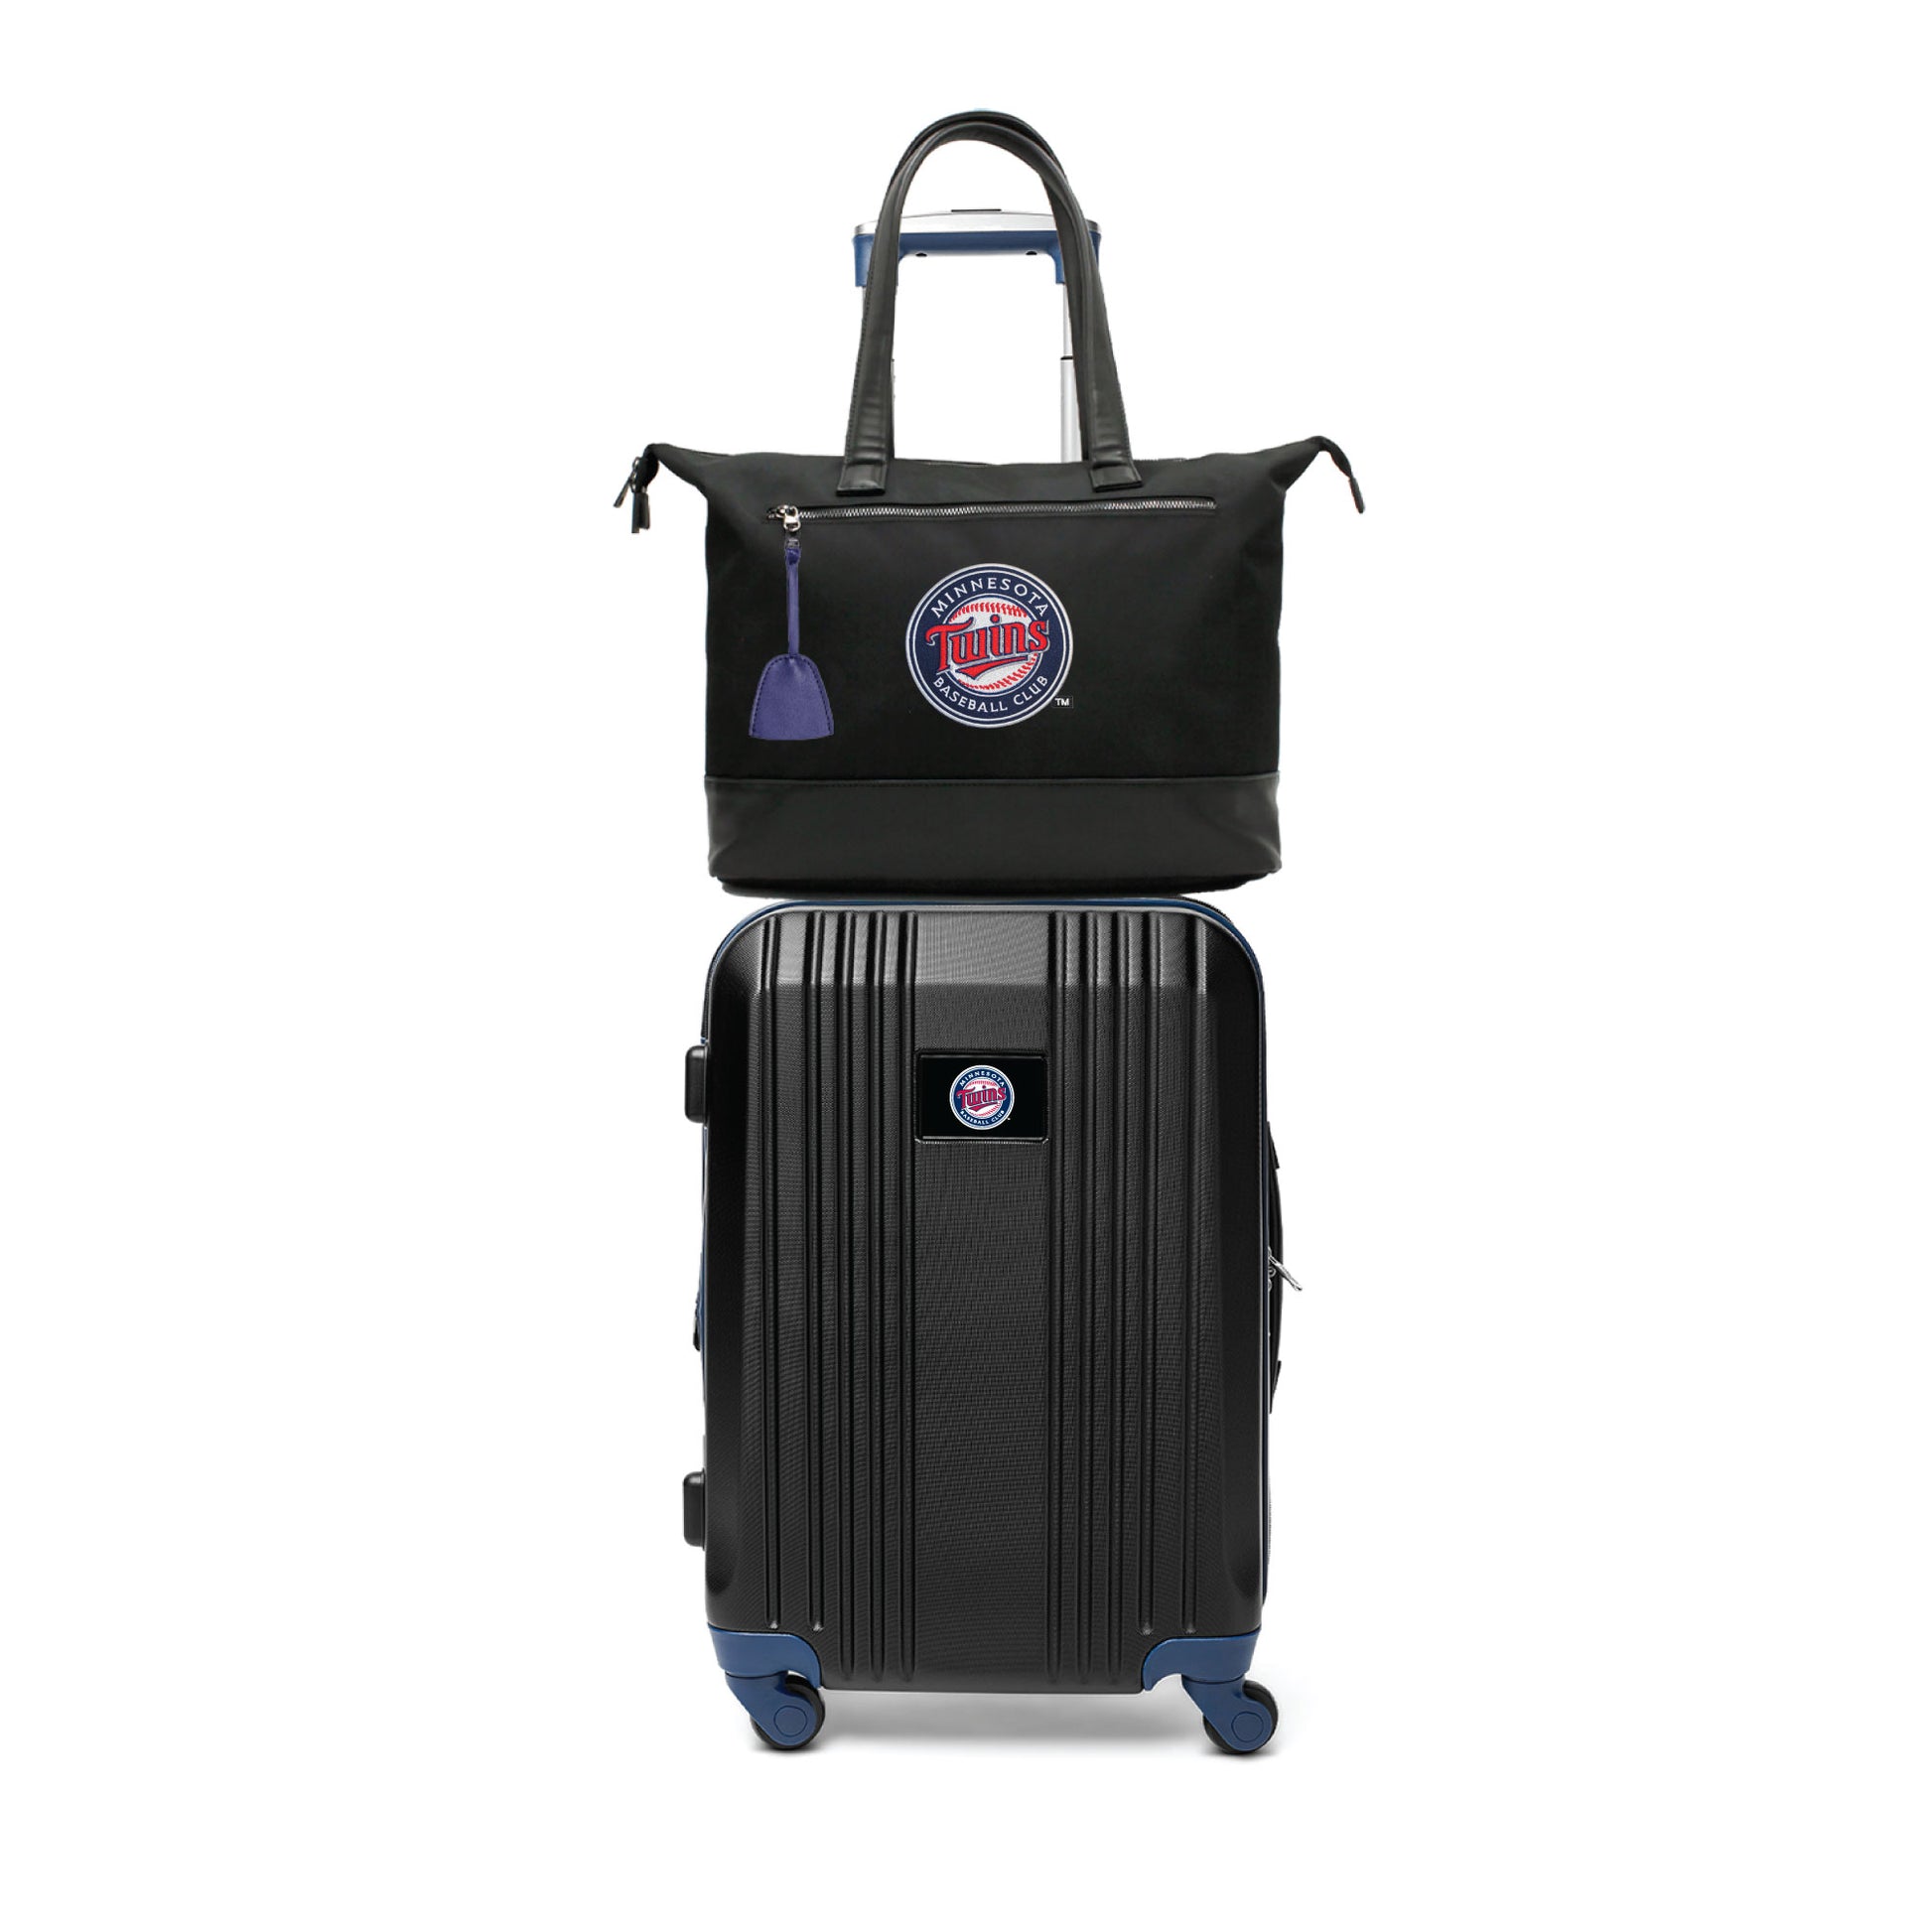 Minnesota Twins Premium Laptop Tote Bag and Luggage Set